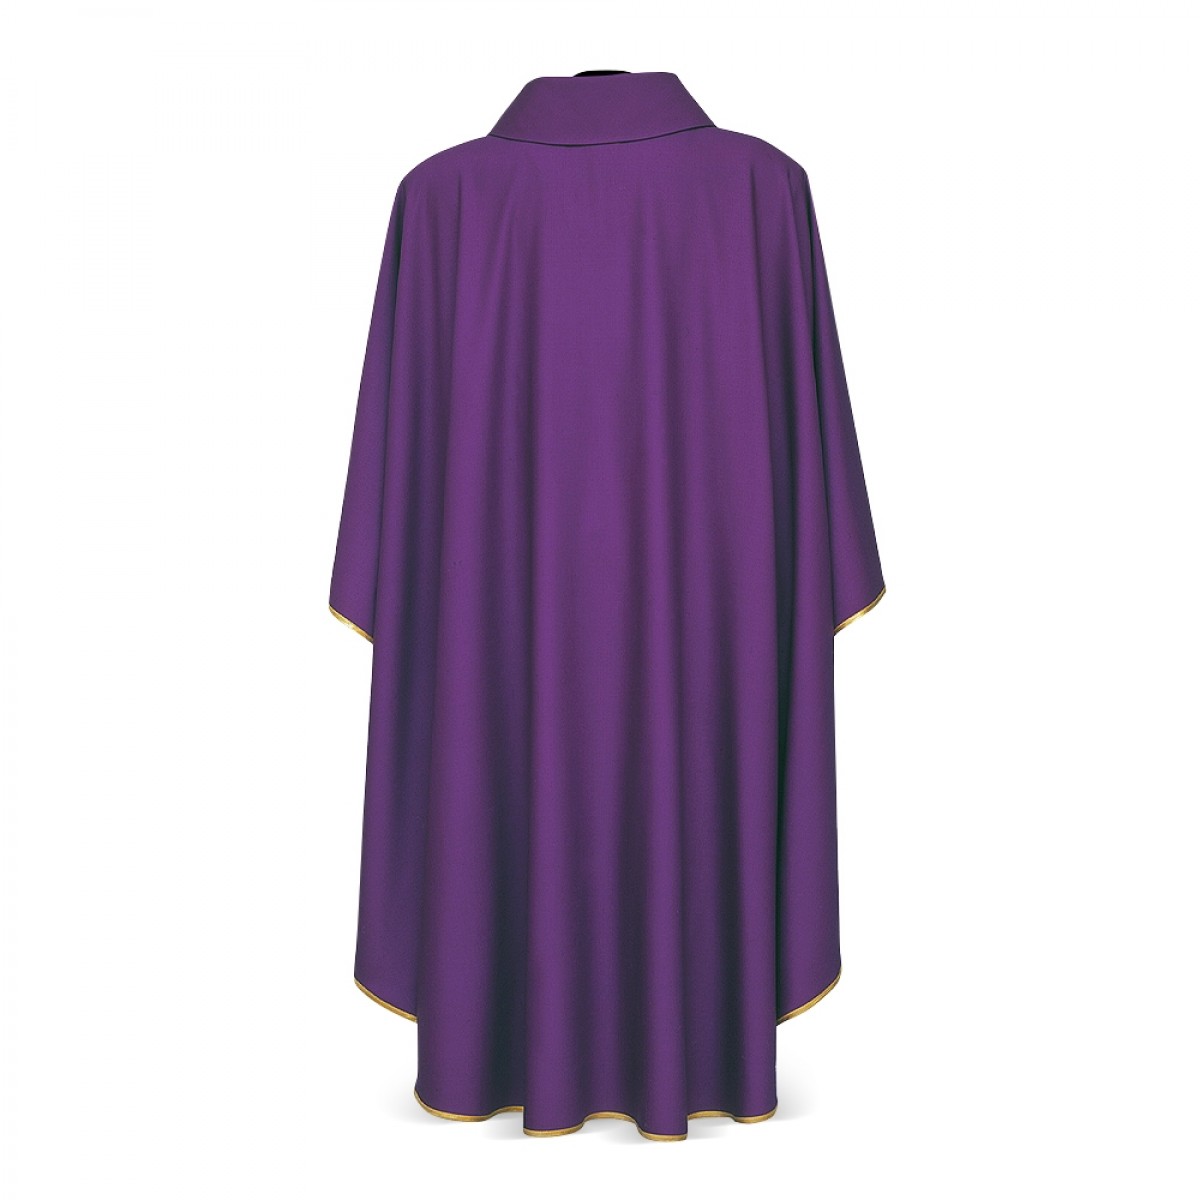 Roman Chasuble COLLO ANELLO Design in Wool Blend #5505 - Chasubles ...